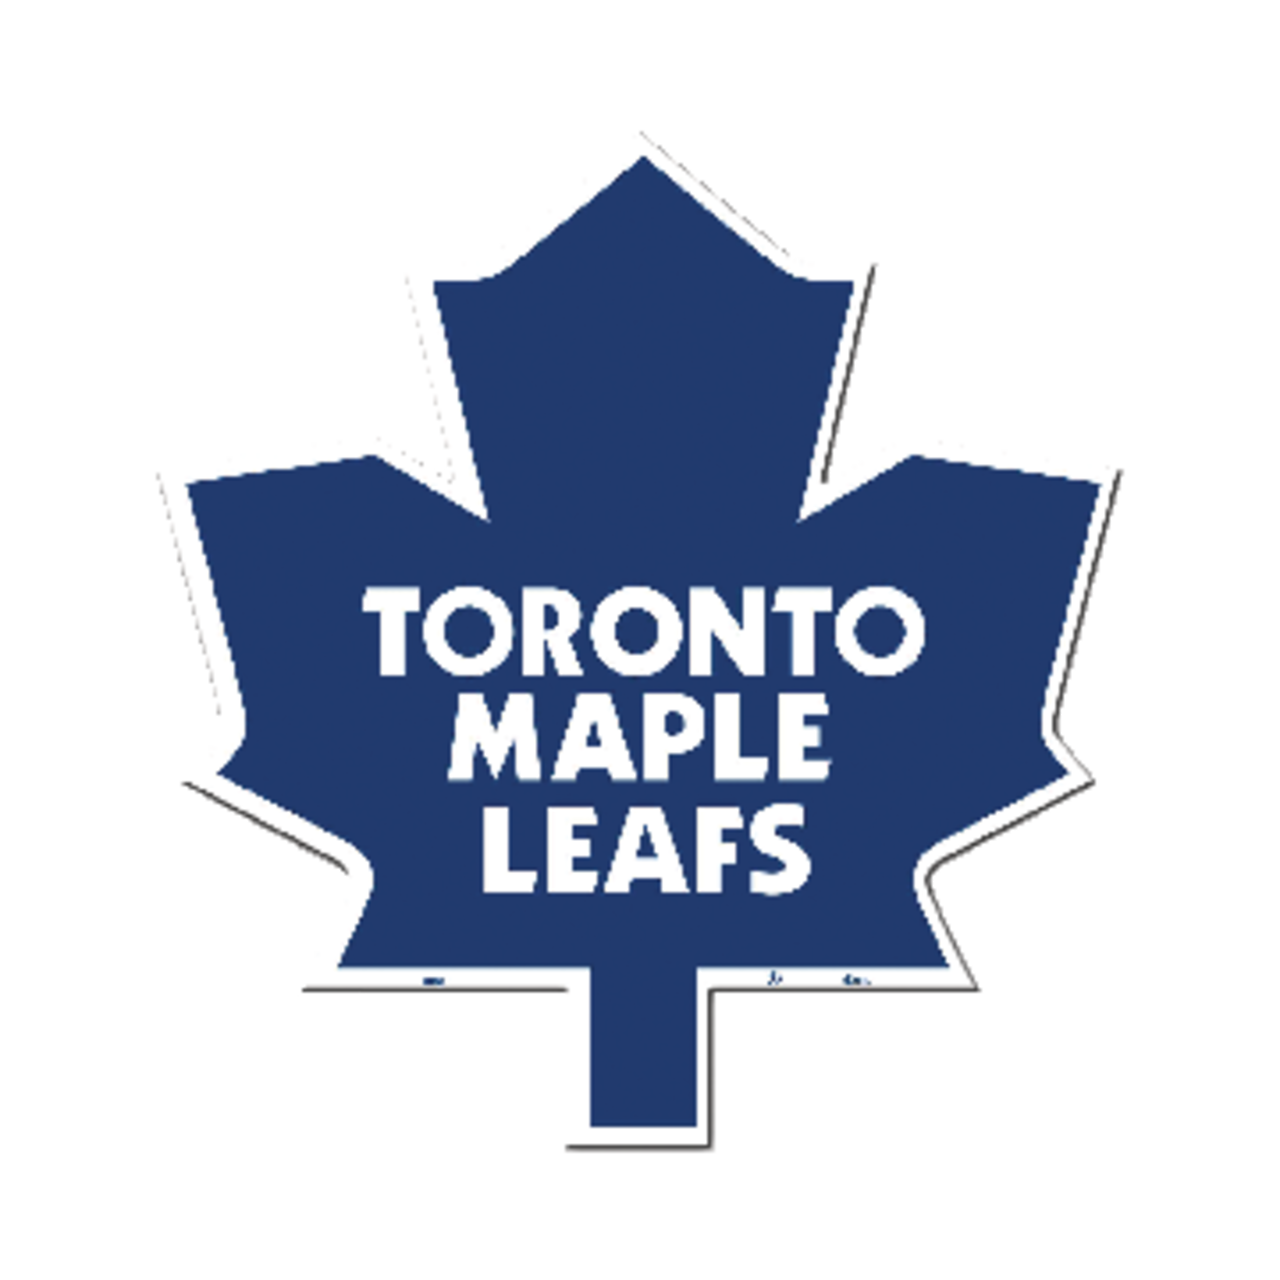 NHL Toronto Maple Leafs Hockey Team Crest Magnet, 8-in